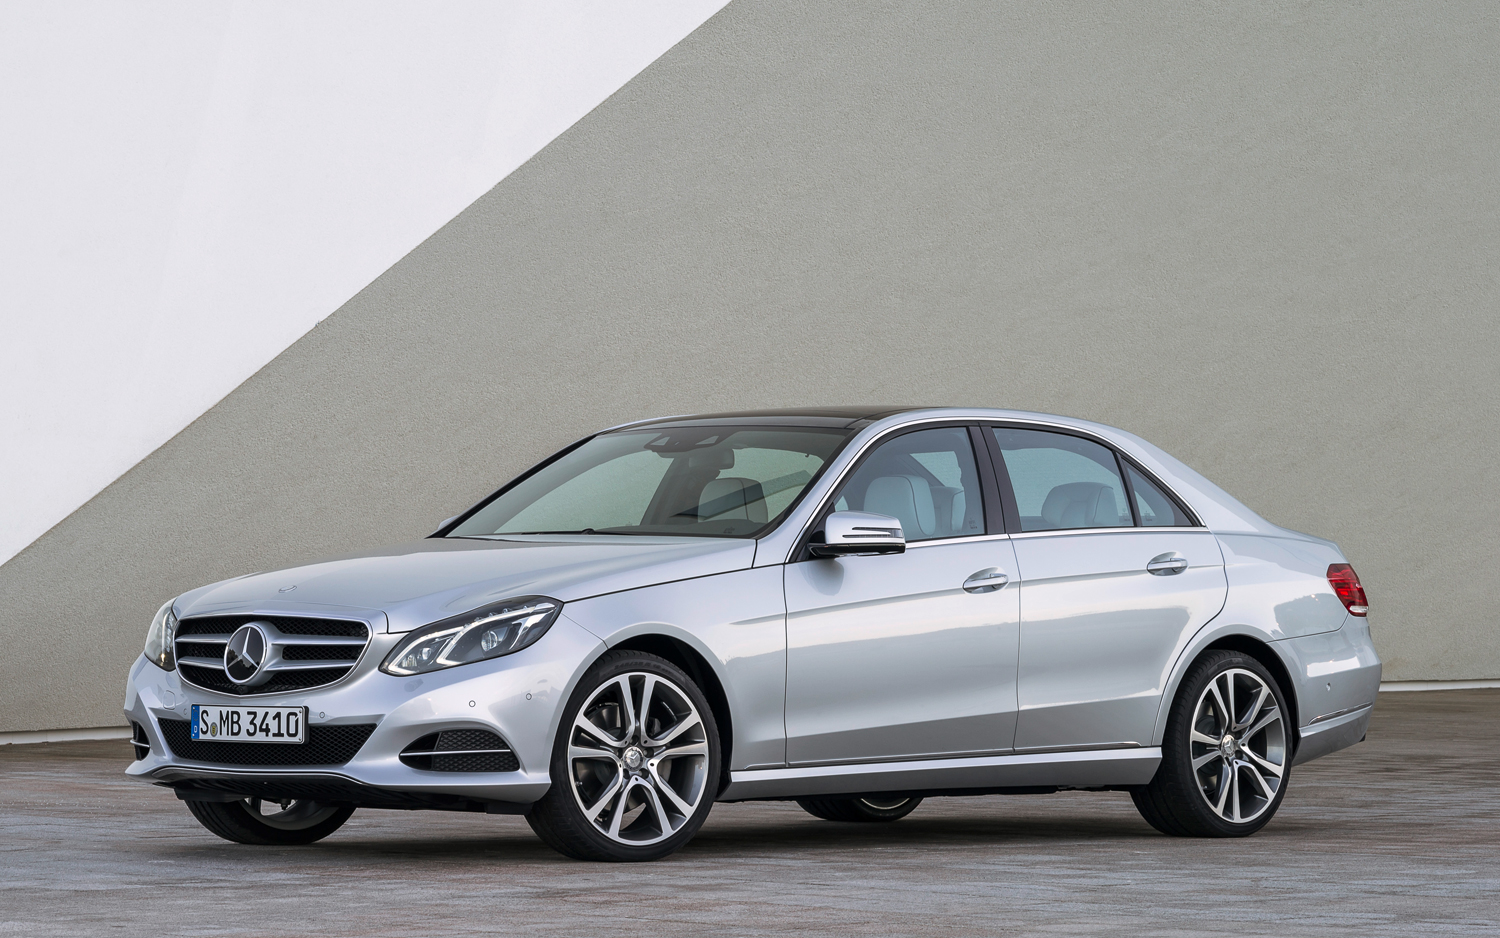 Giá xe Mercedes E250 2014 (new e-class) - Thông số kỹ thuật